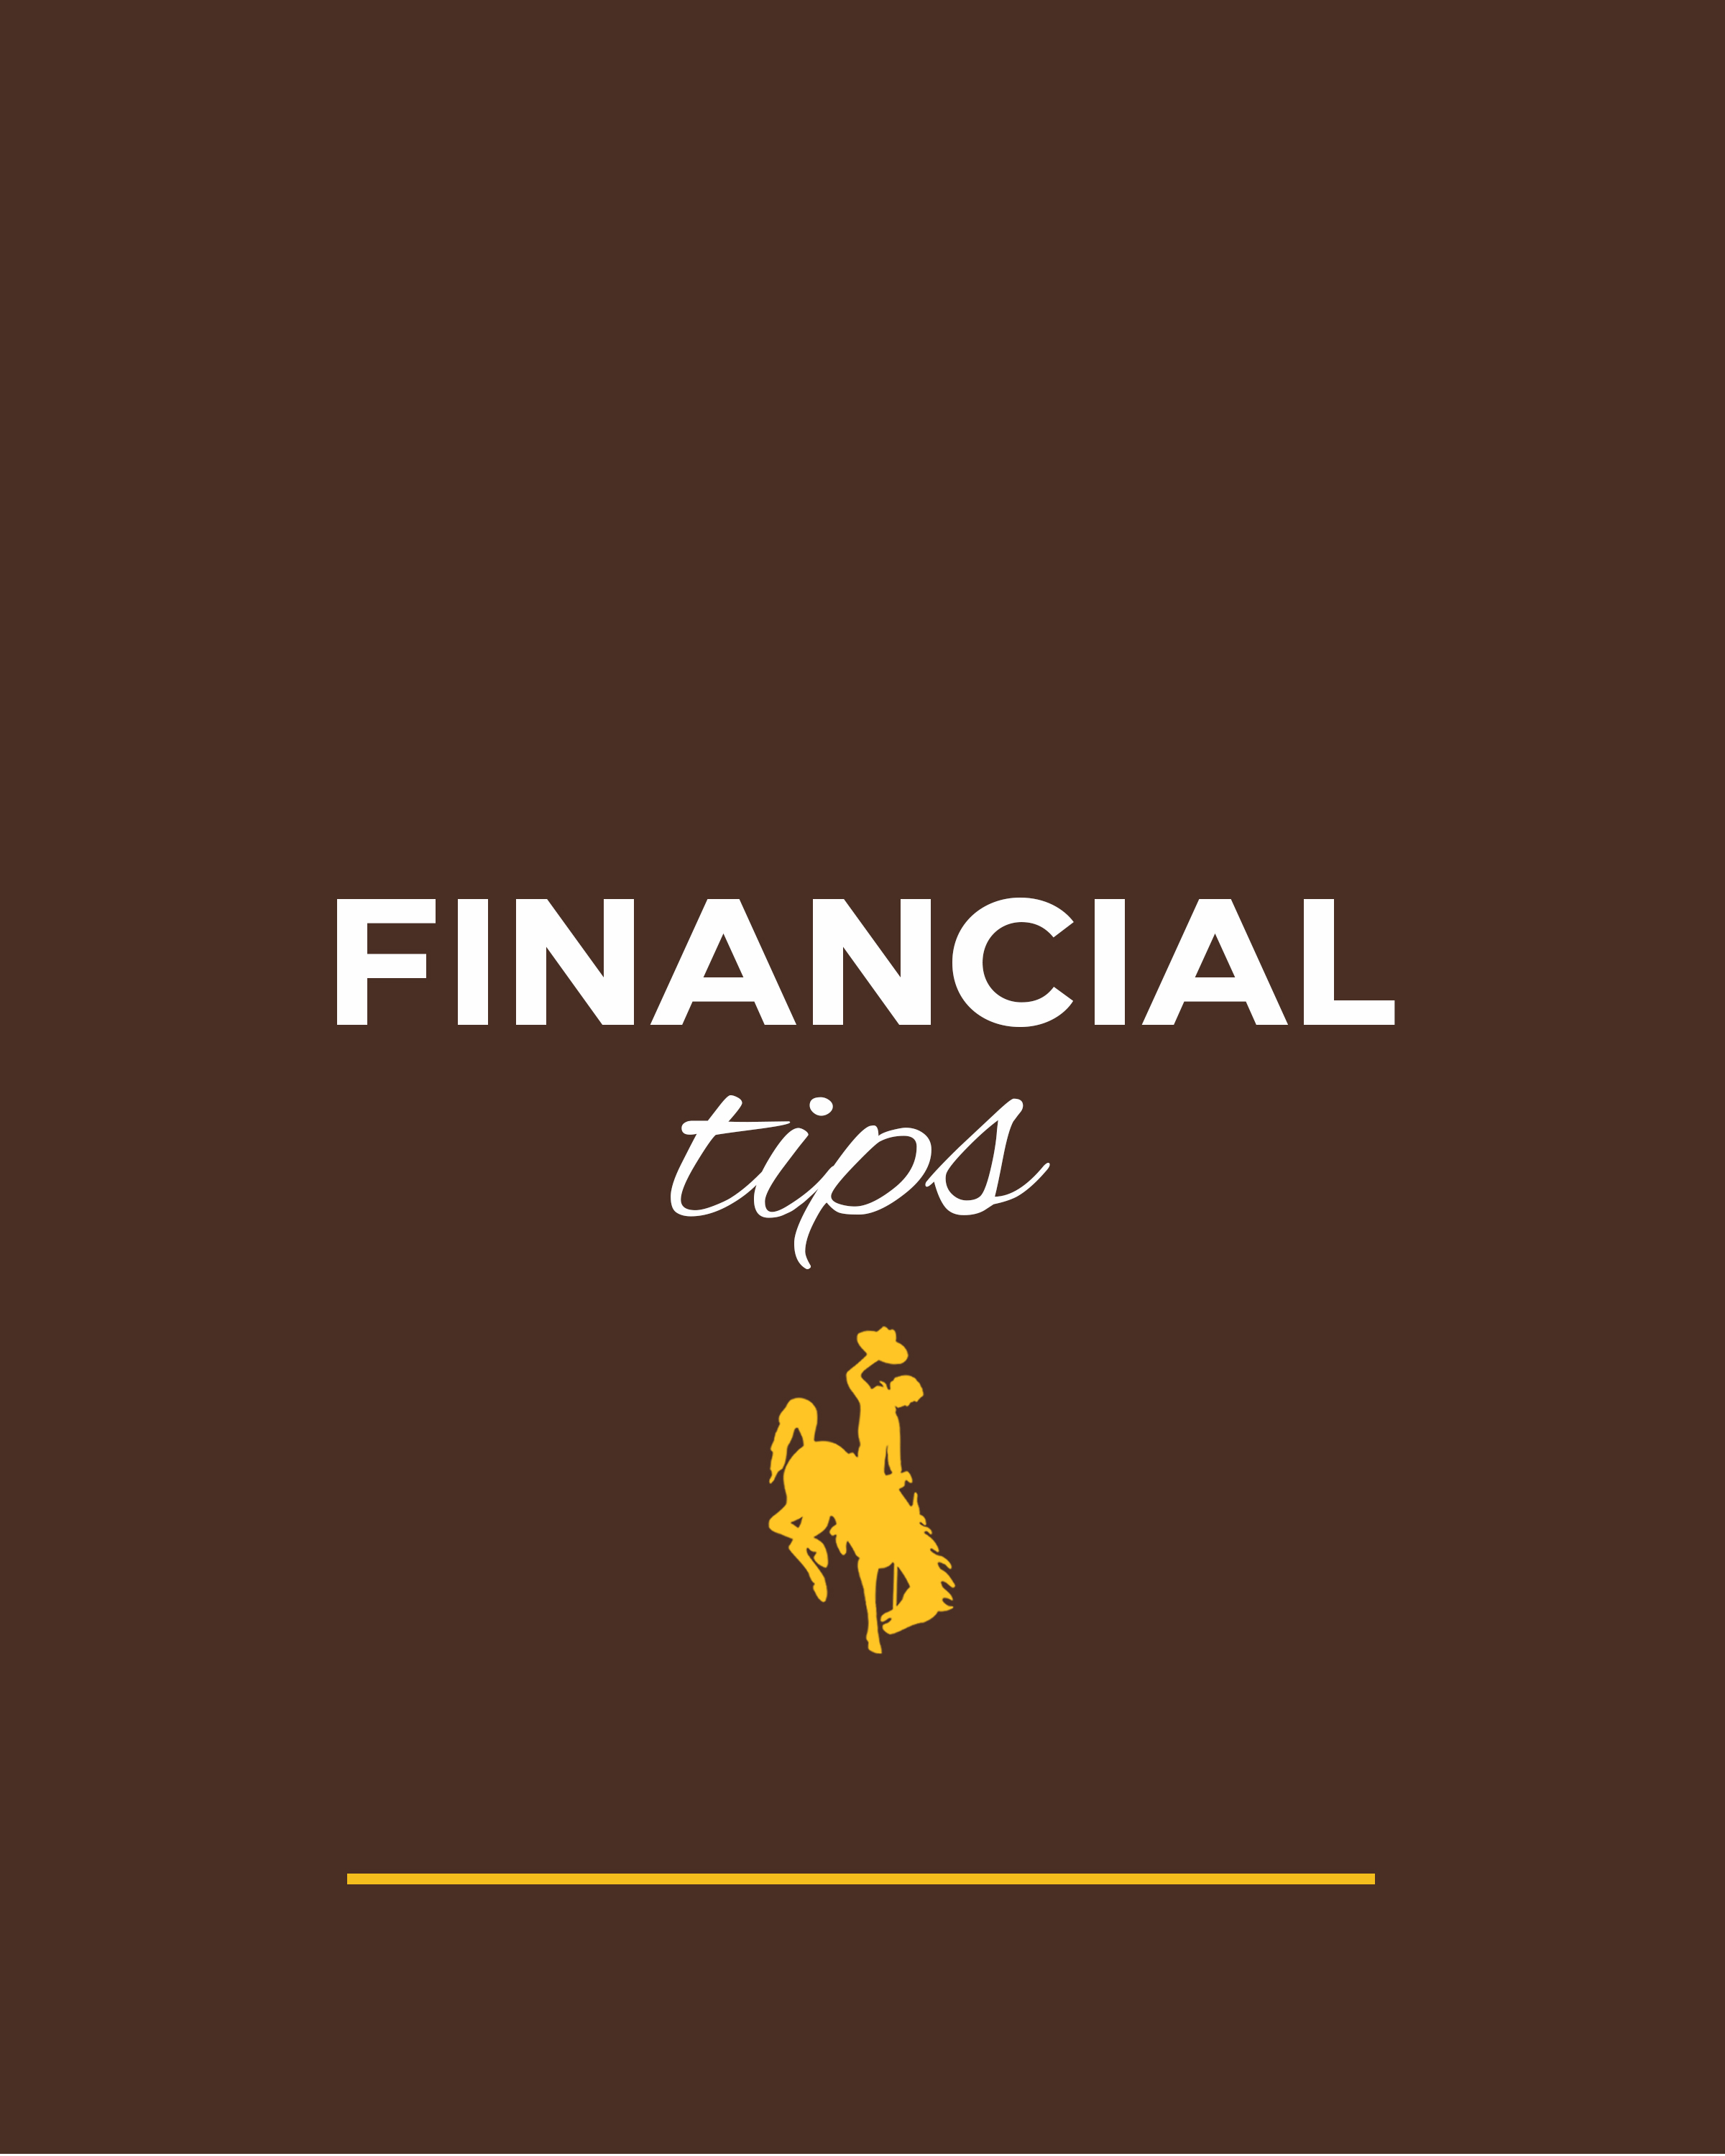 Financial Tips